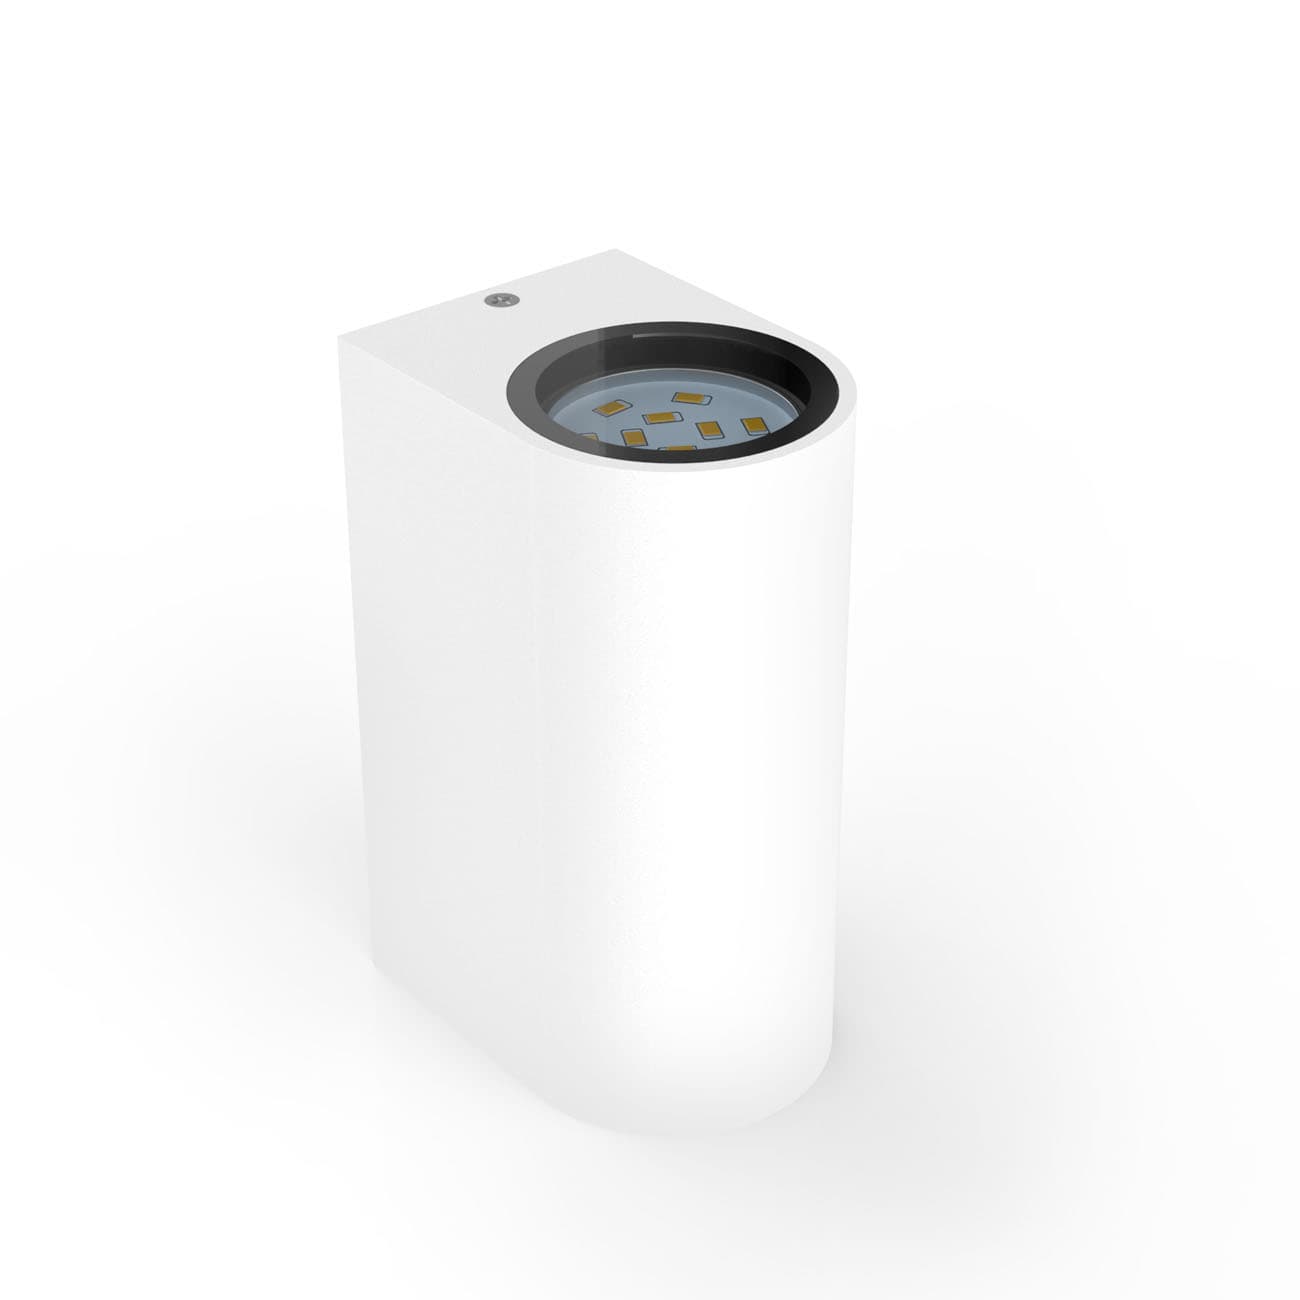 LED Wandleuchte IP44 Außen - 2-flammig - Badezimmer-Wandlampe 15x7x9cm Up-Down-Light inkl 2x GU10 5W 400lm 3000K warmweiß | weiß - 4